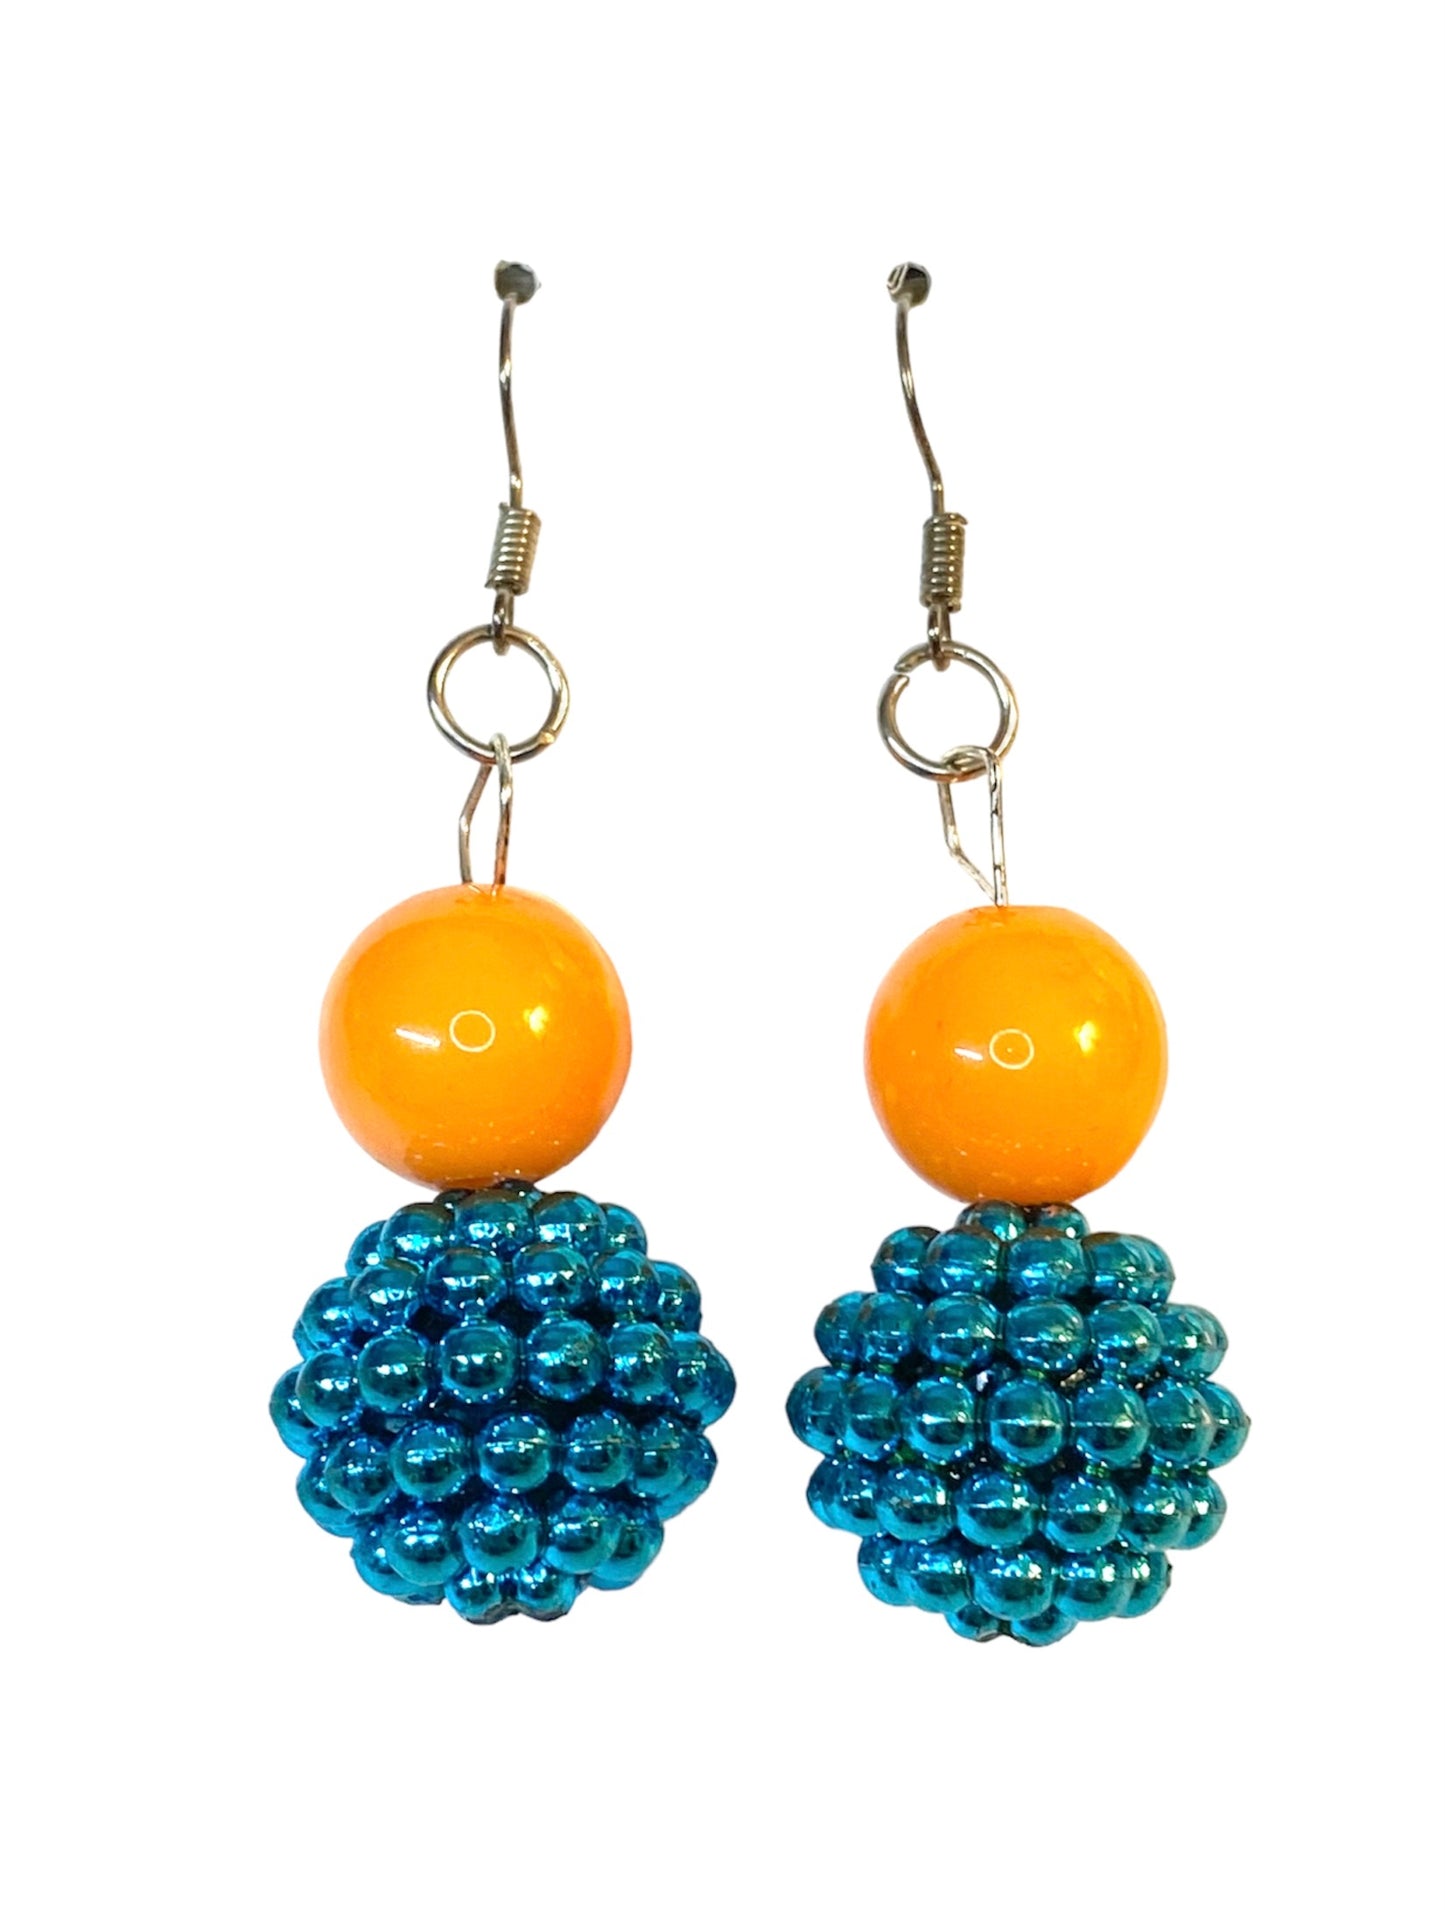 Blue and Orange Bead Earrings